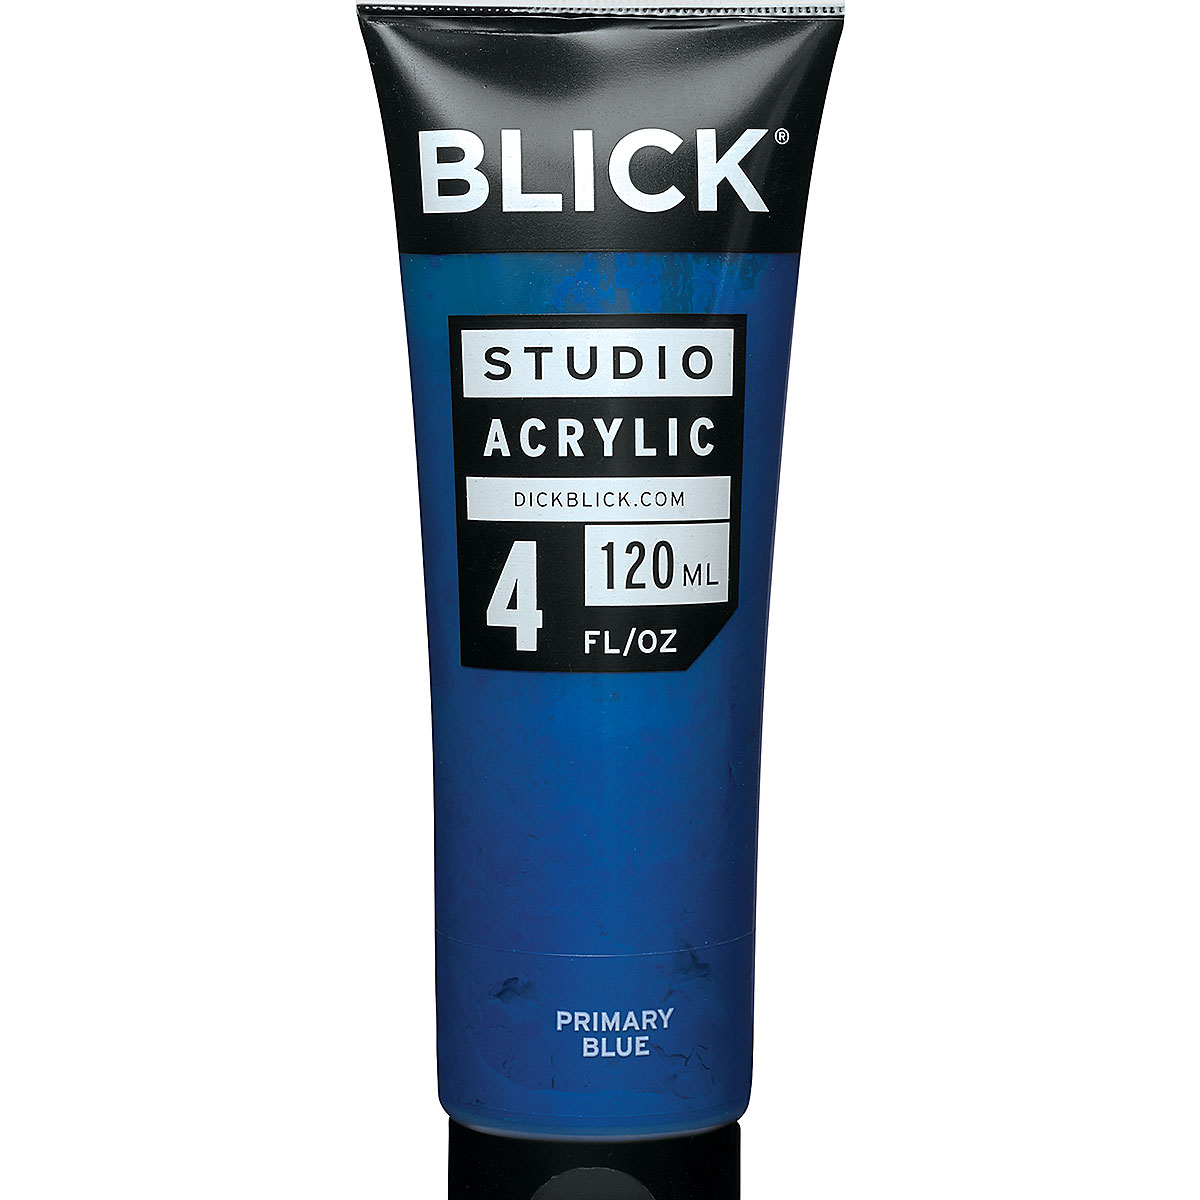 Blick Studio Acrylics - Primary Red, 4 oz tube 